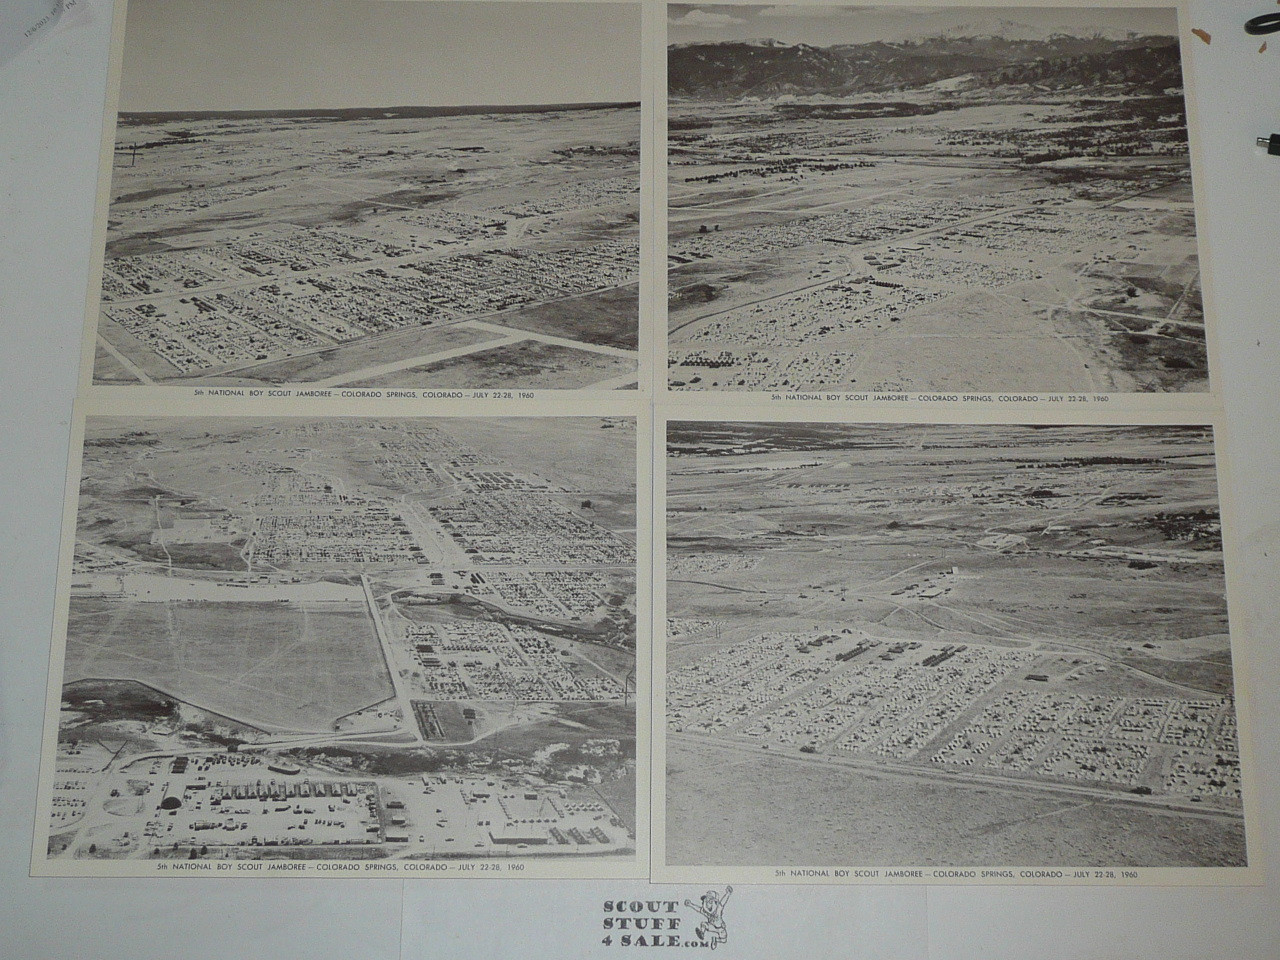 1960 National Jamboree Set of 4 8"x10" Airel Photographs of the Jamboree Site